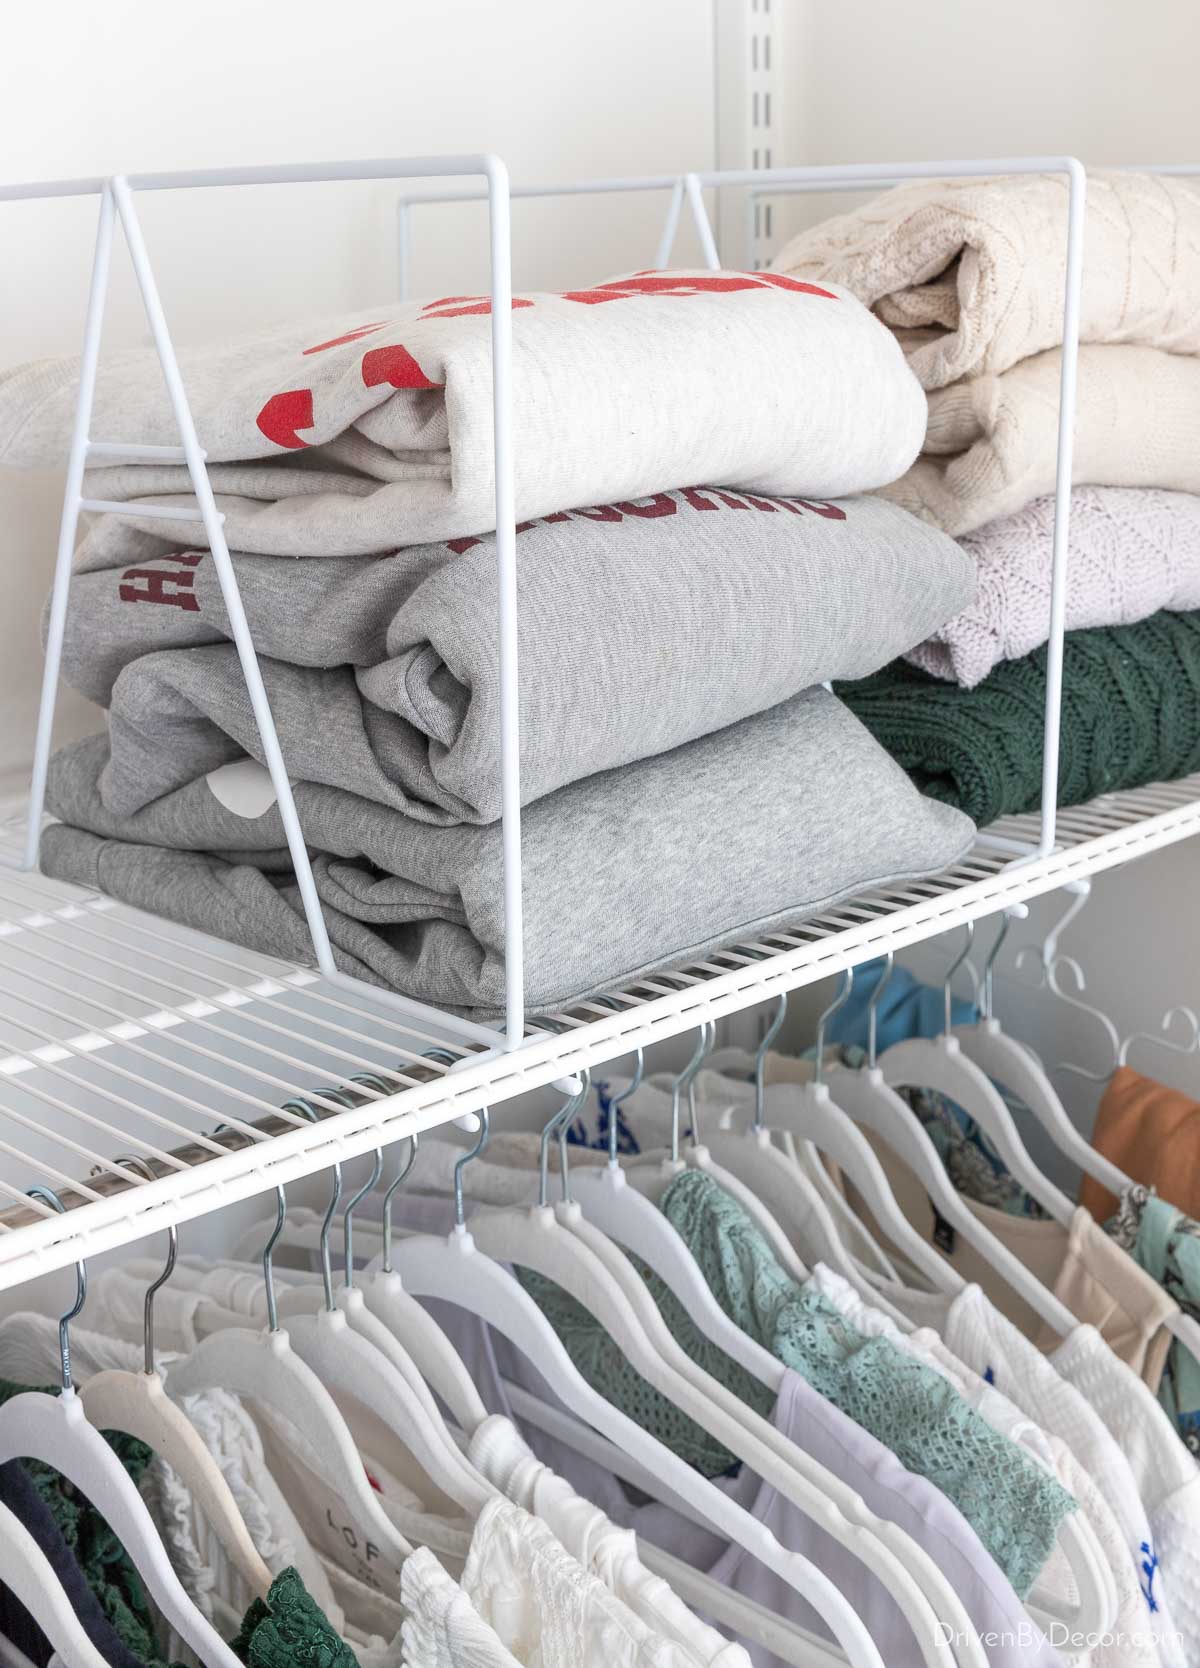 Wire shelf dividers for closet organization